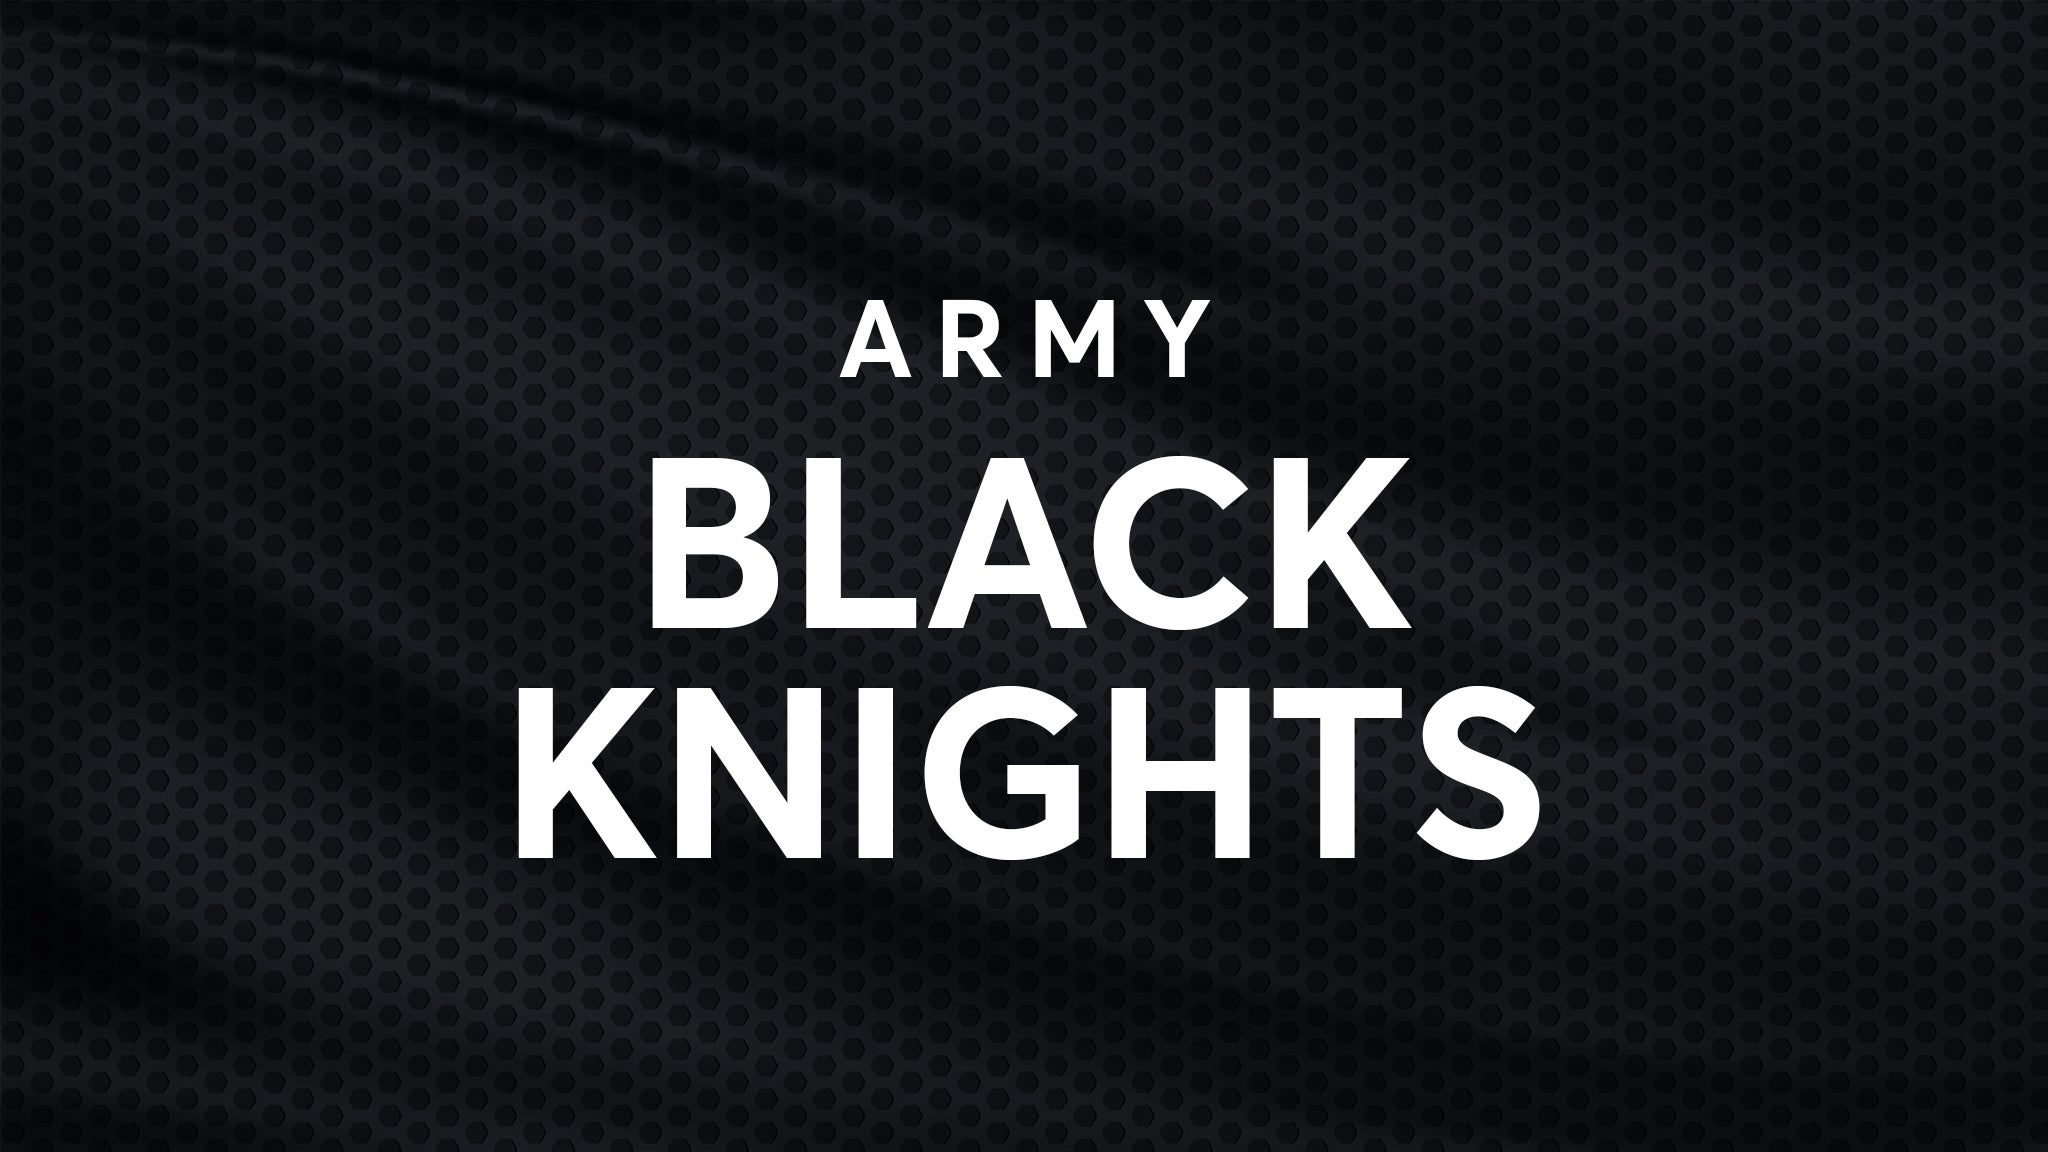 Army Black Knights Football vs. Texas San Antonio Roadrunners Football hero